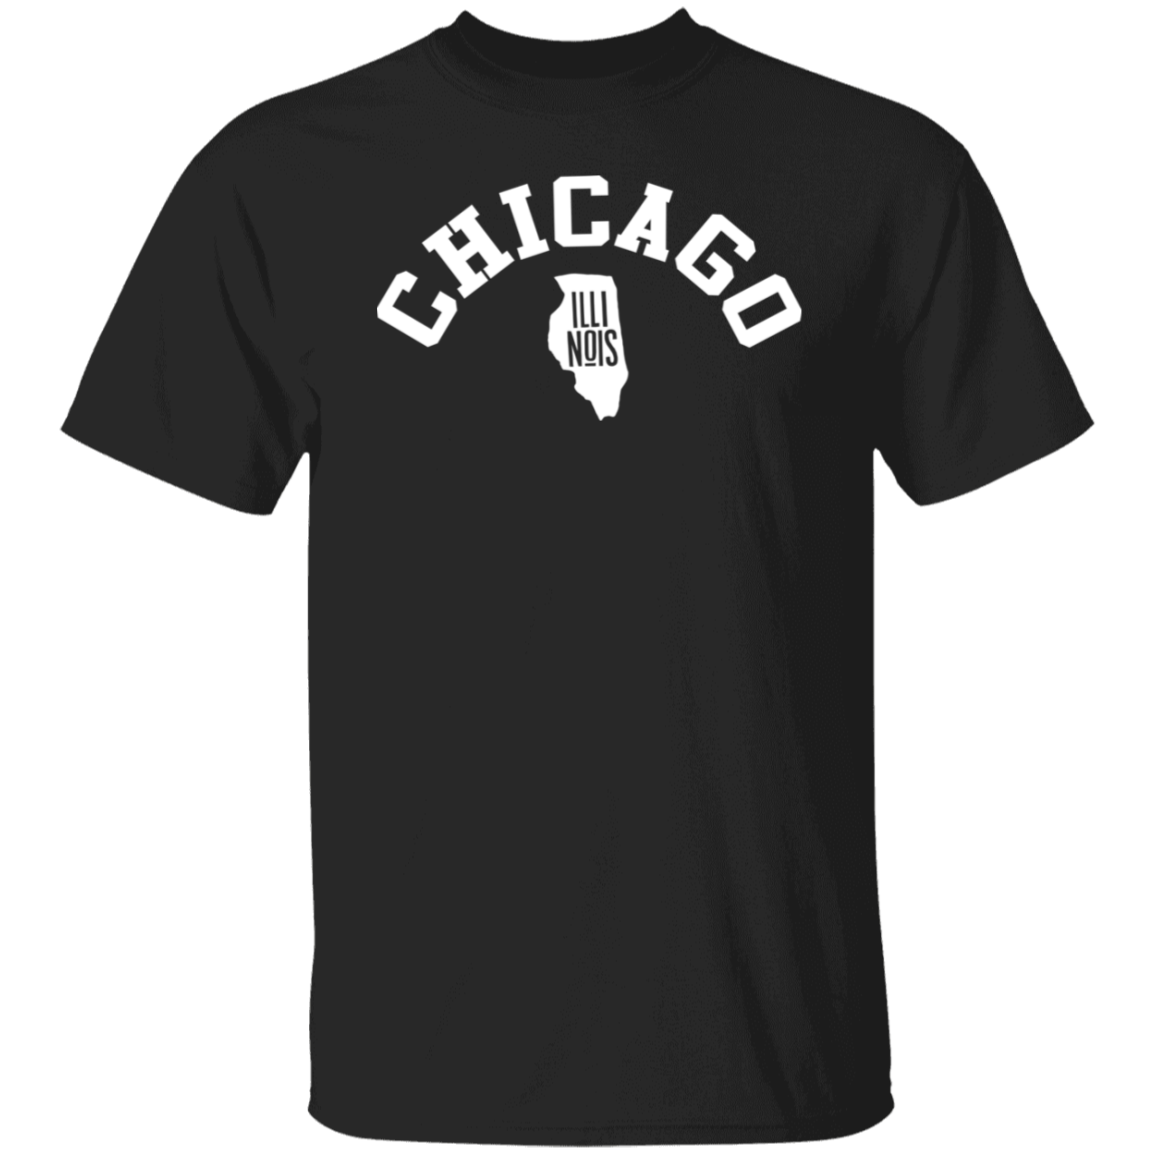 Chicago Illinois Circular White Print T-Shirt